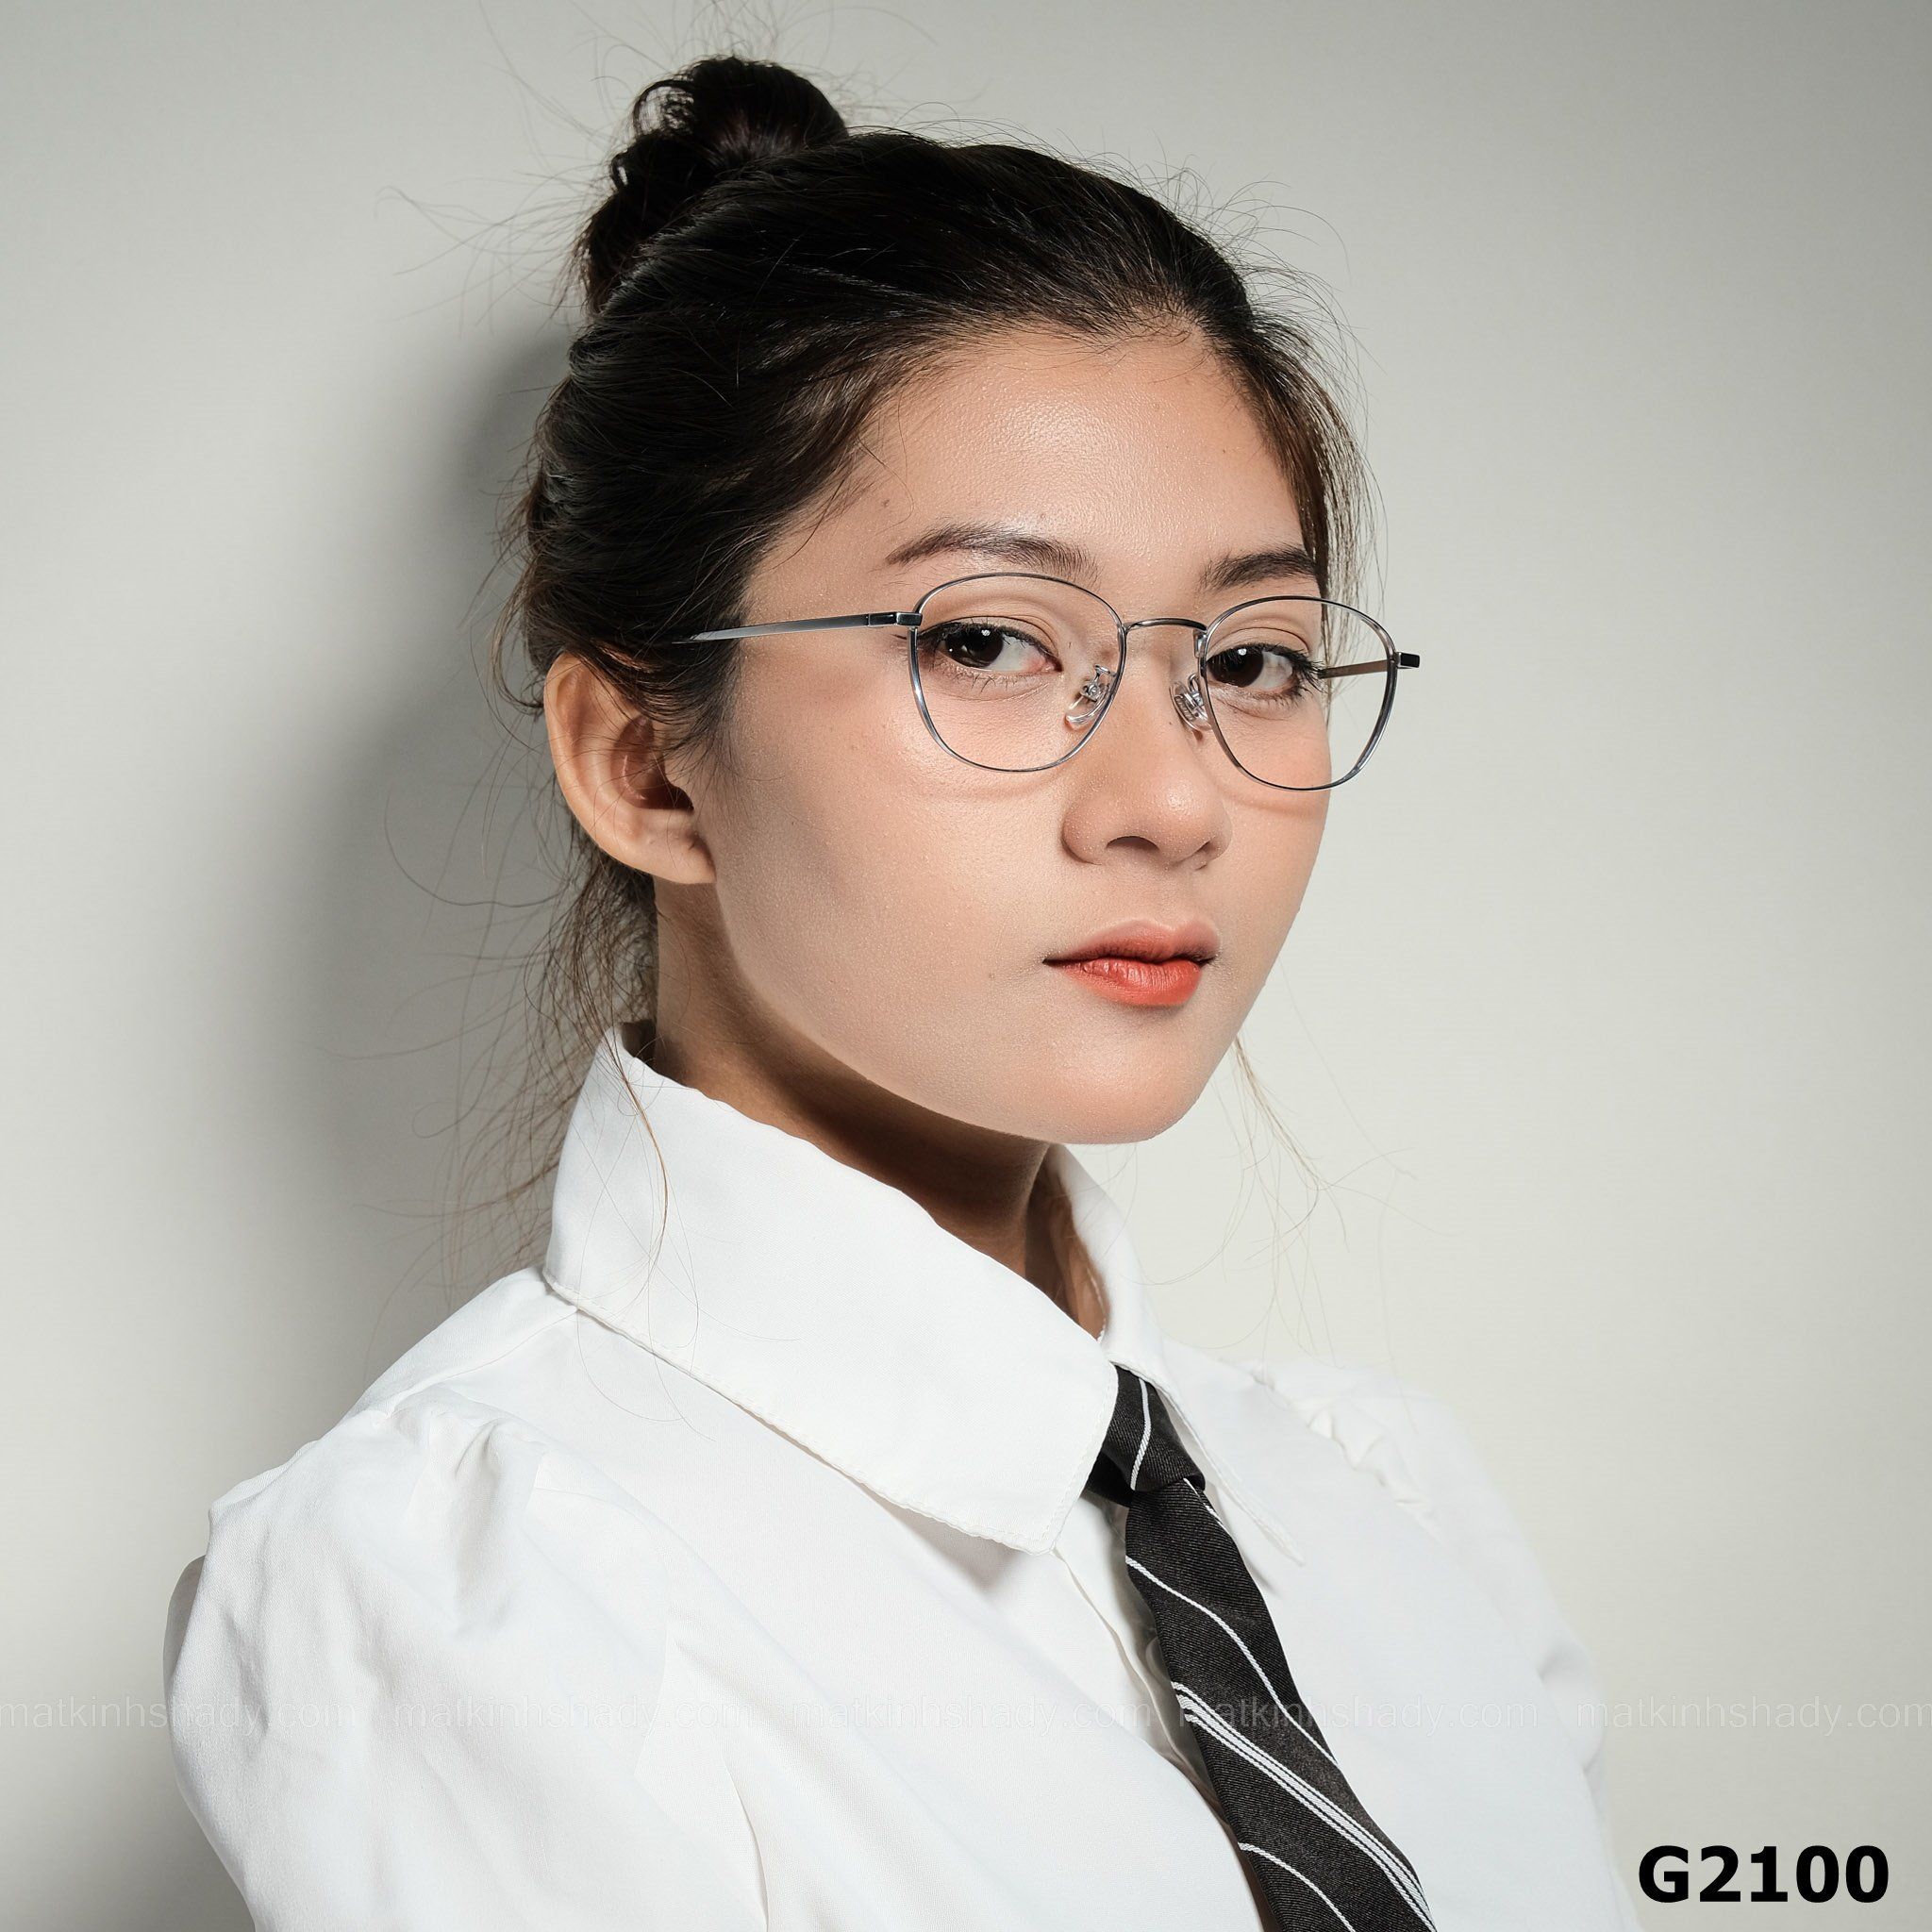  SHADY Eyewear - Glasses - G2100 